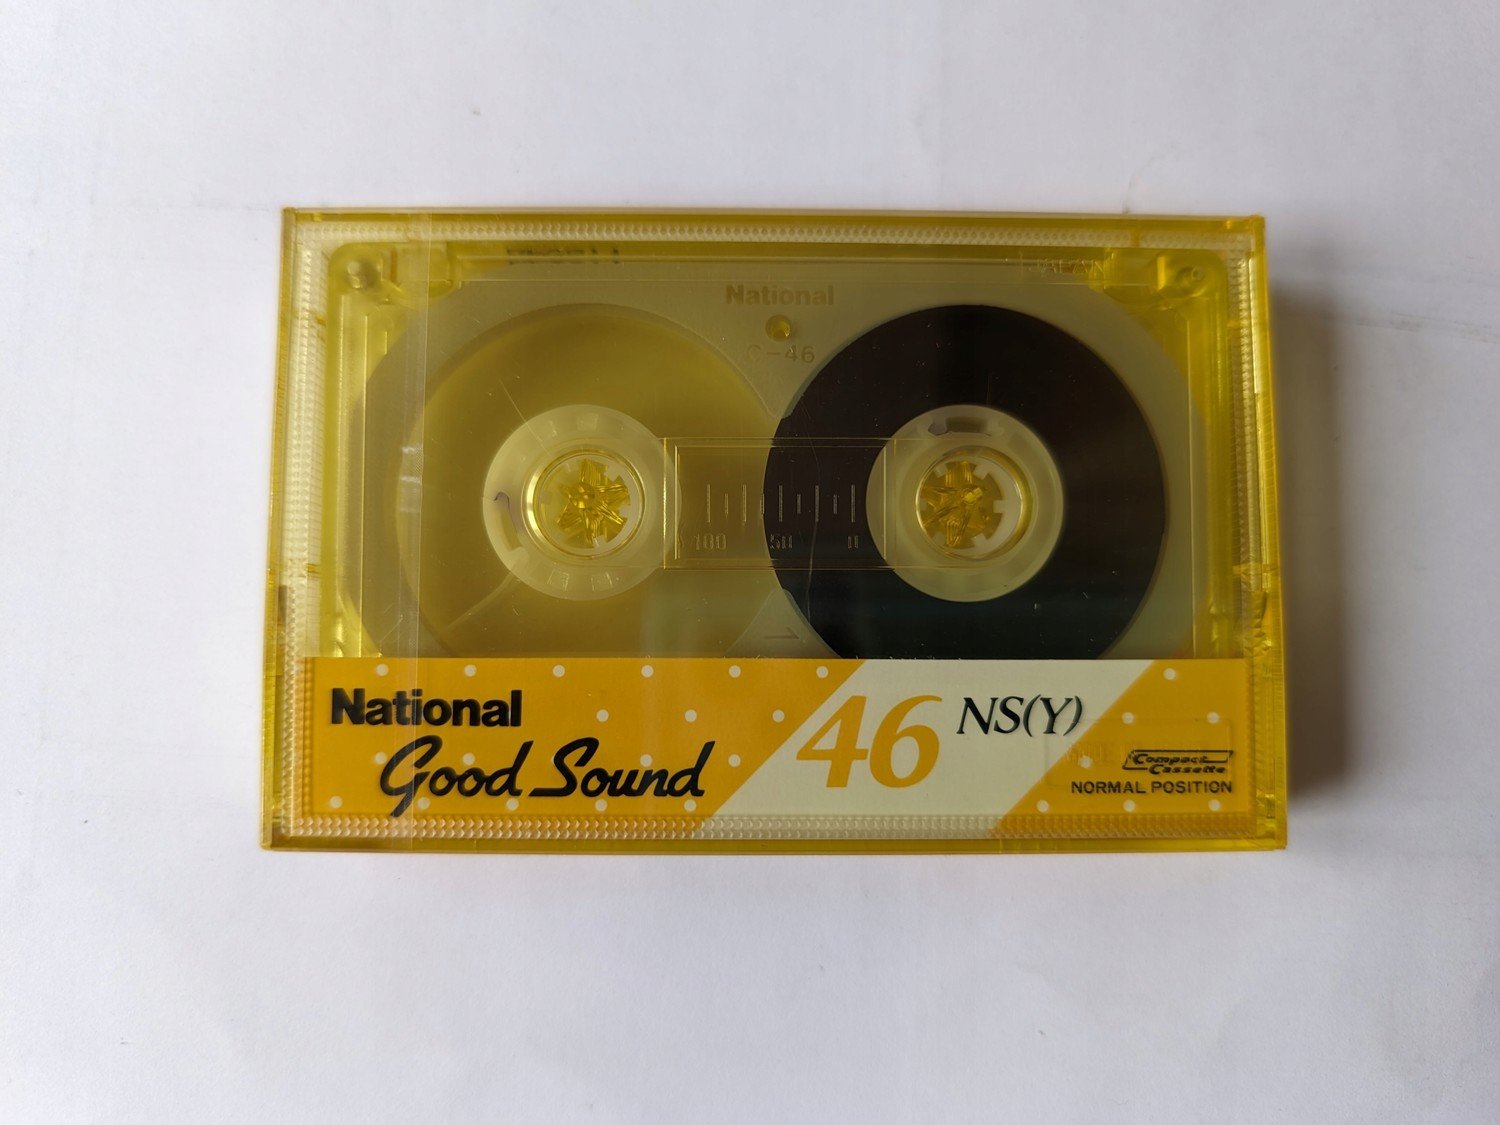 National Technics Good Sound RT-46NS(Y) 1986